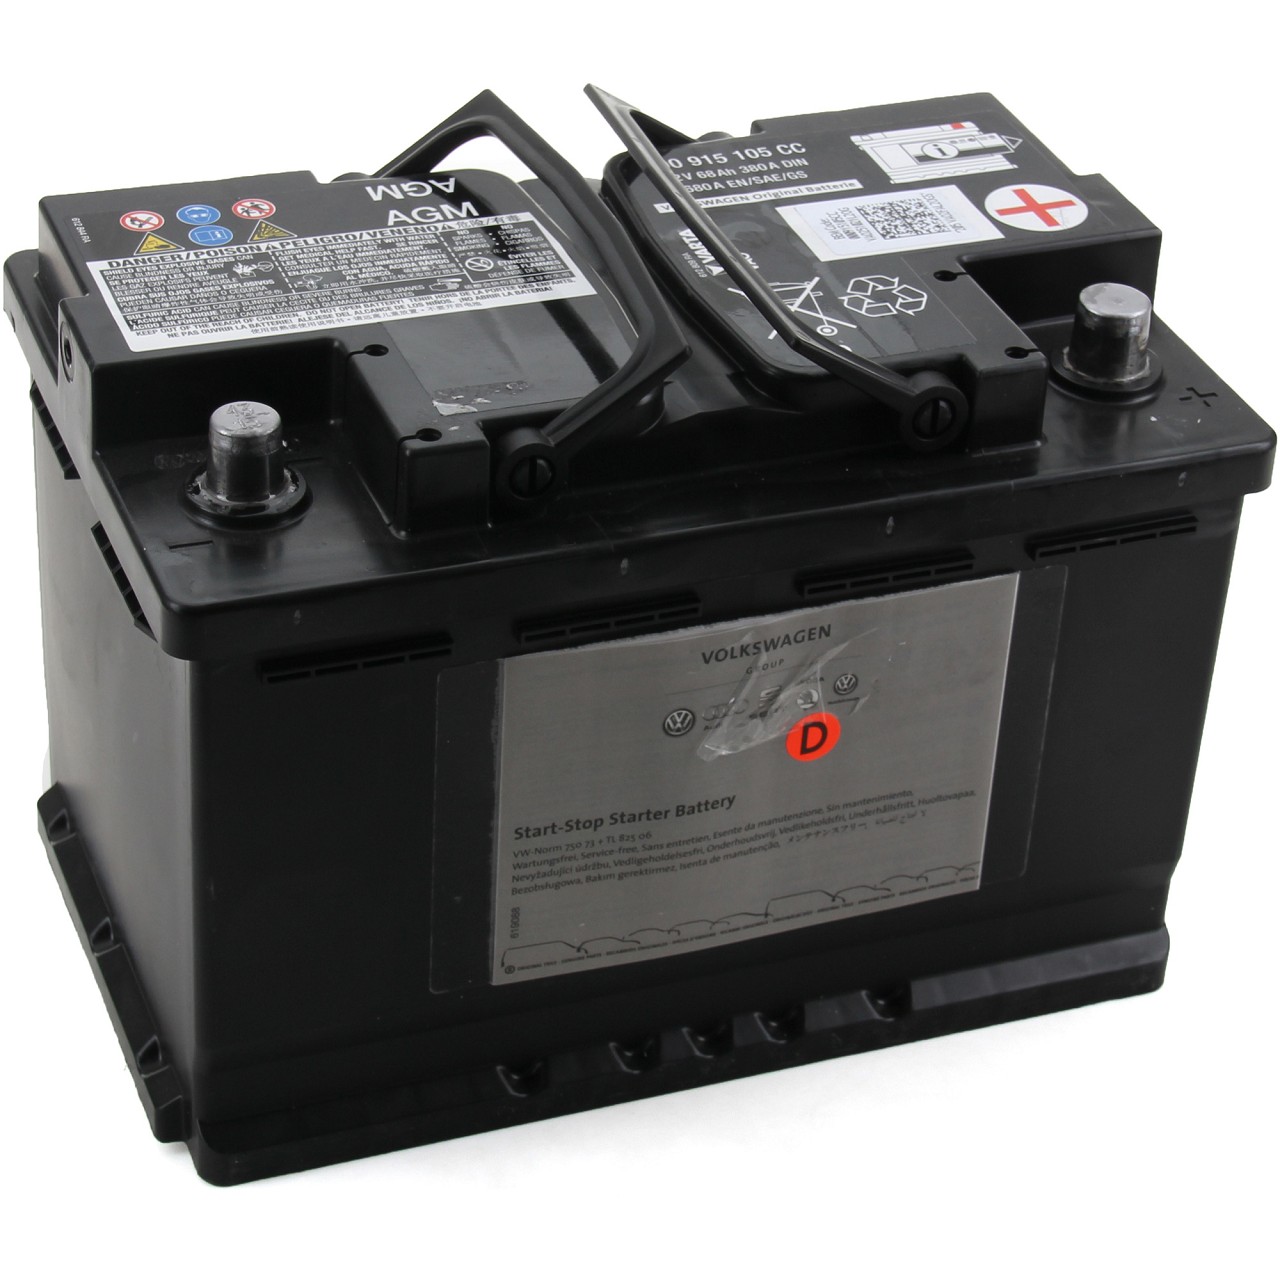 ORIGINAL VAG Autobatterie Batterie Starterbatterie 12V 68Ah 380/680A/EN 000915105CC